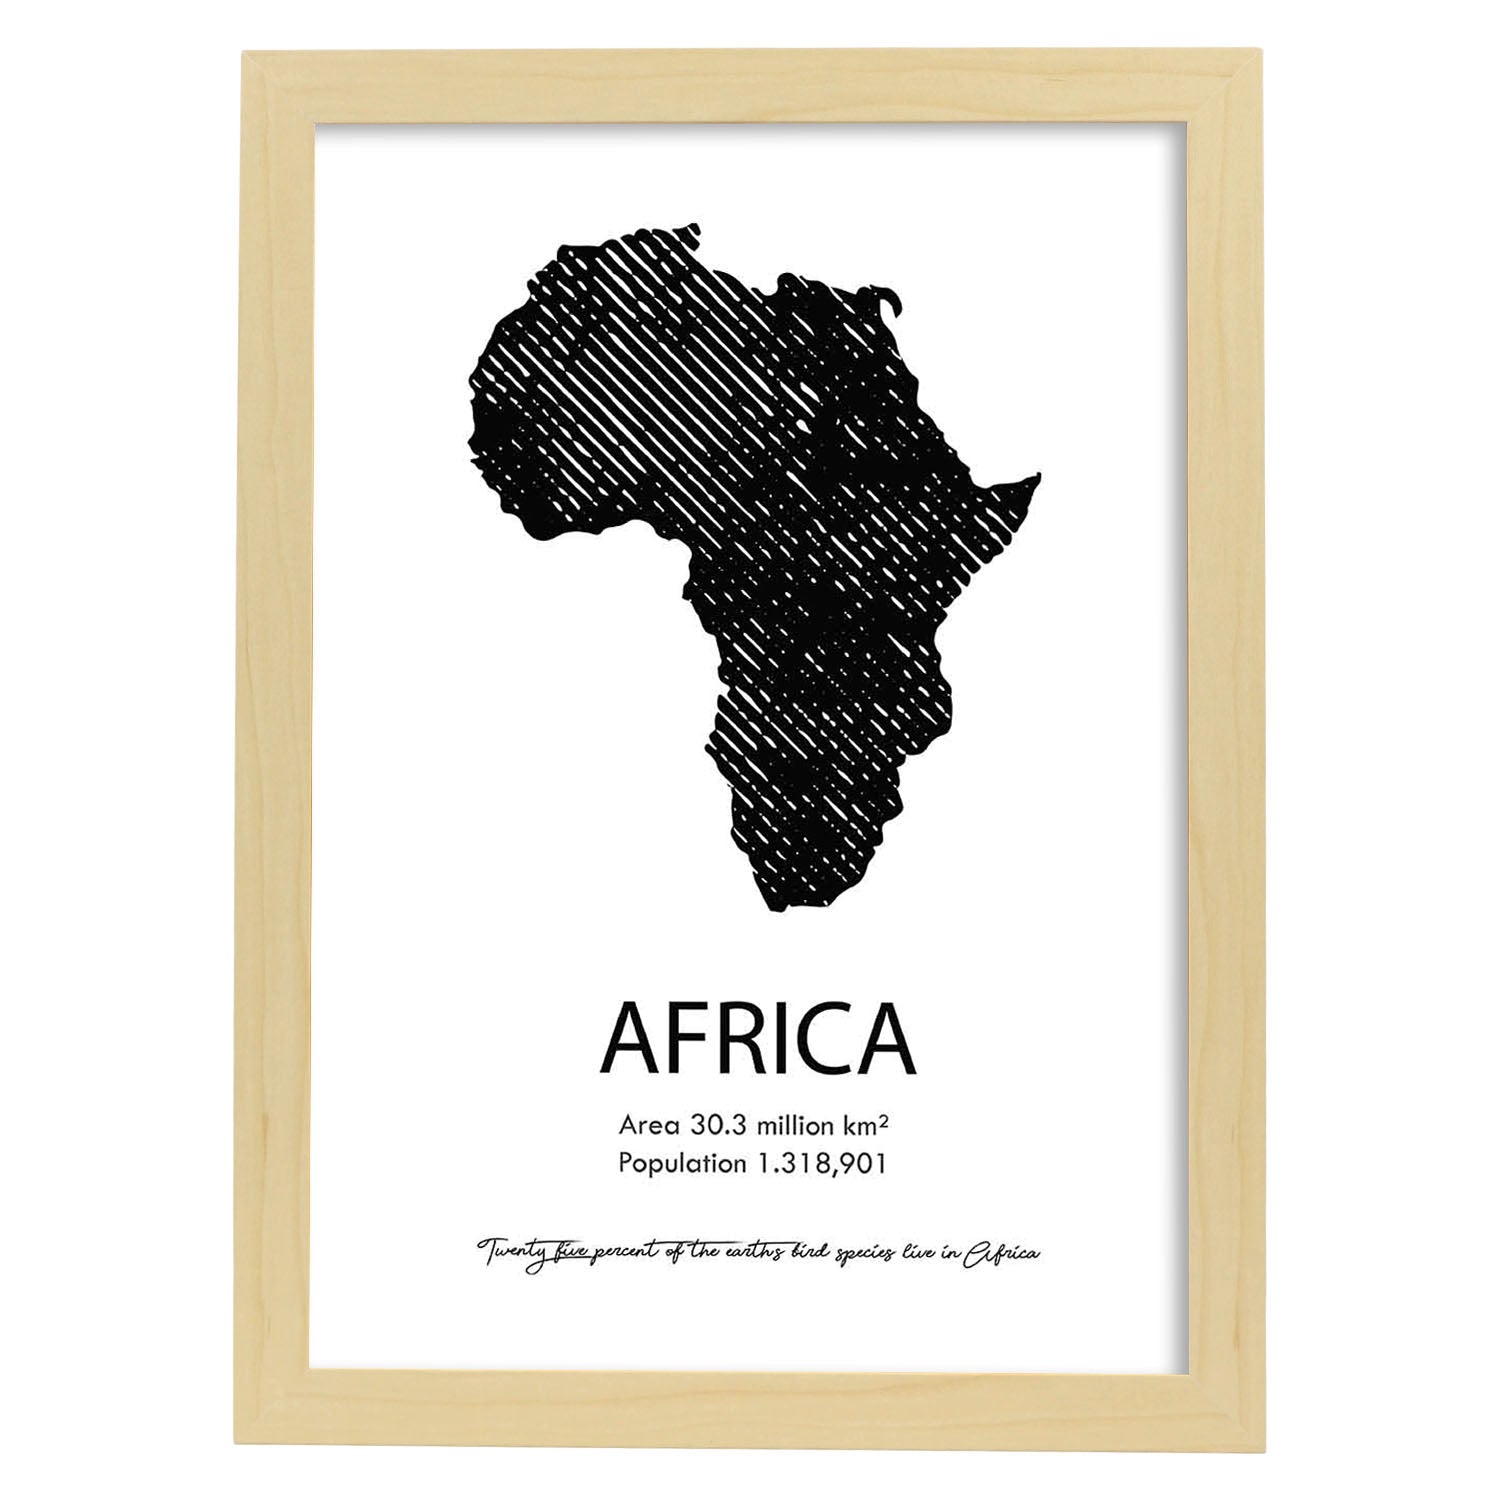 Poster de Africa. Láminas de paises y continentes del mundo.-Artwork-Nacnic-A4-Marco Madera clara-Nacnic Estudio SL